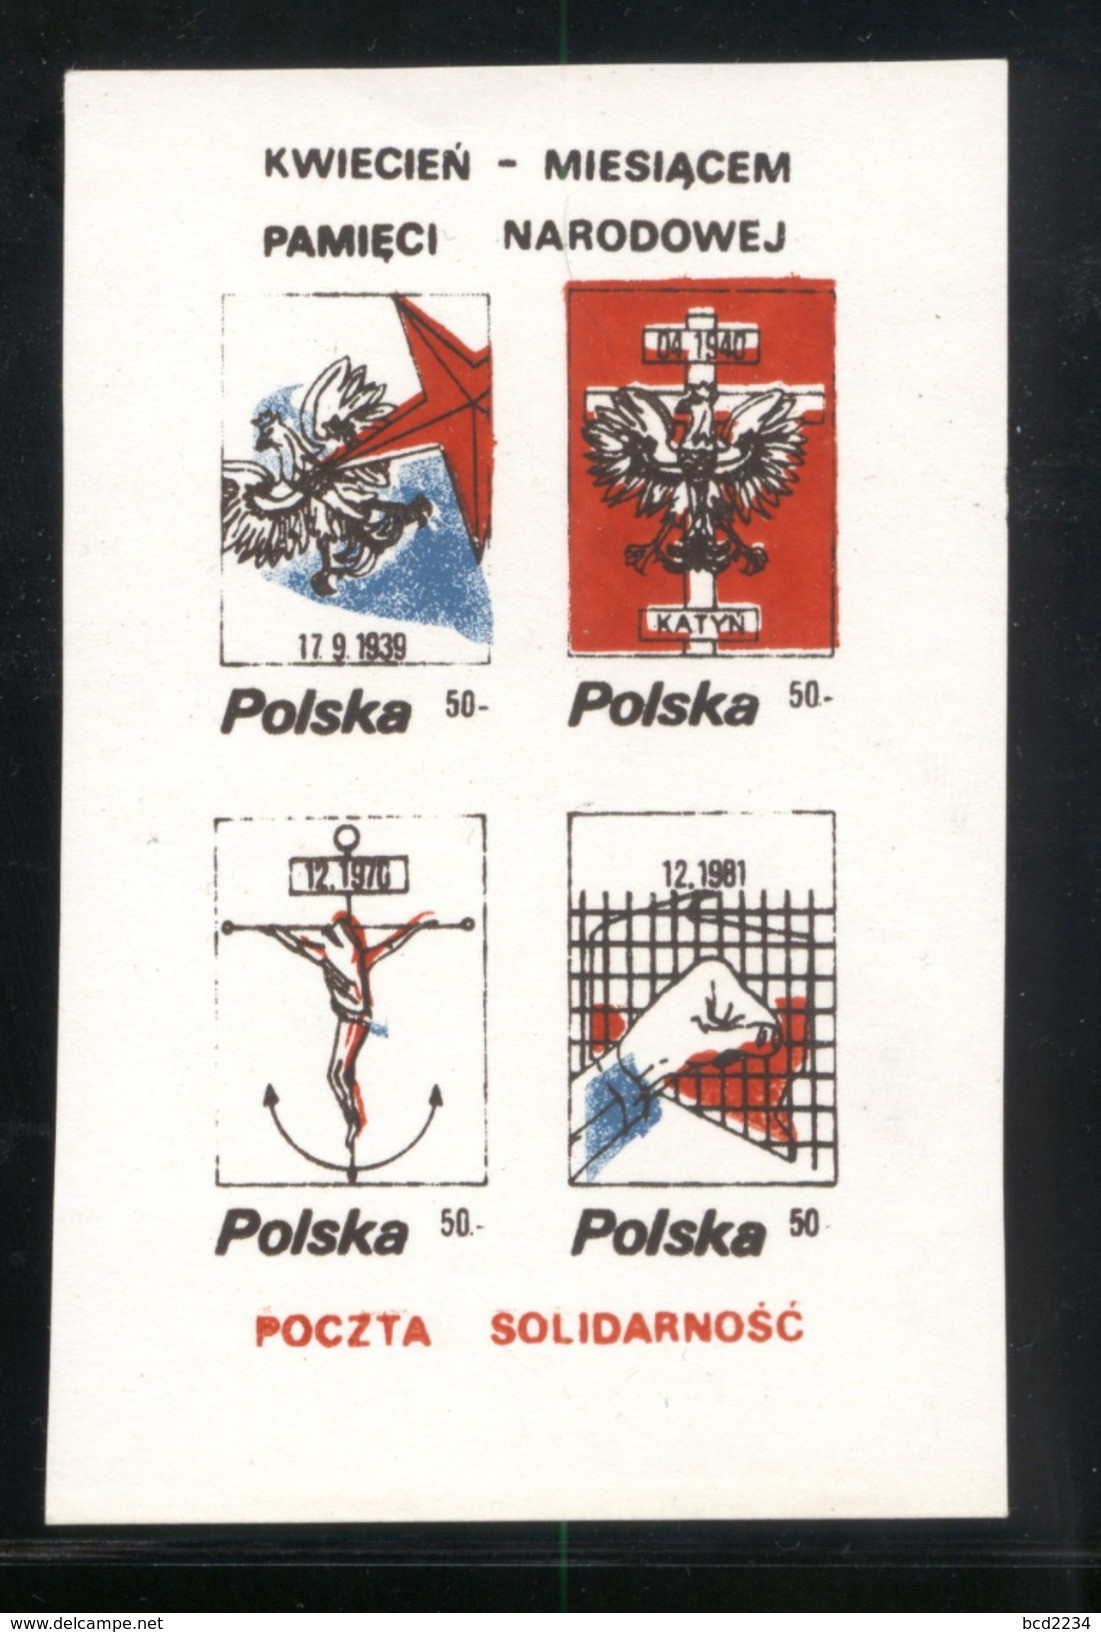 POLAND SOLIDARNOSC SOLIDARITY (POCZTA SOLIDARNOSC) APRIL NATIONAL MONTH OF REMEMBRANCE MS KATYN WW2 WORLD WAR 2 - Solidarnosc Vignetten